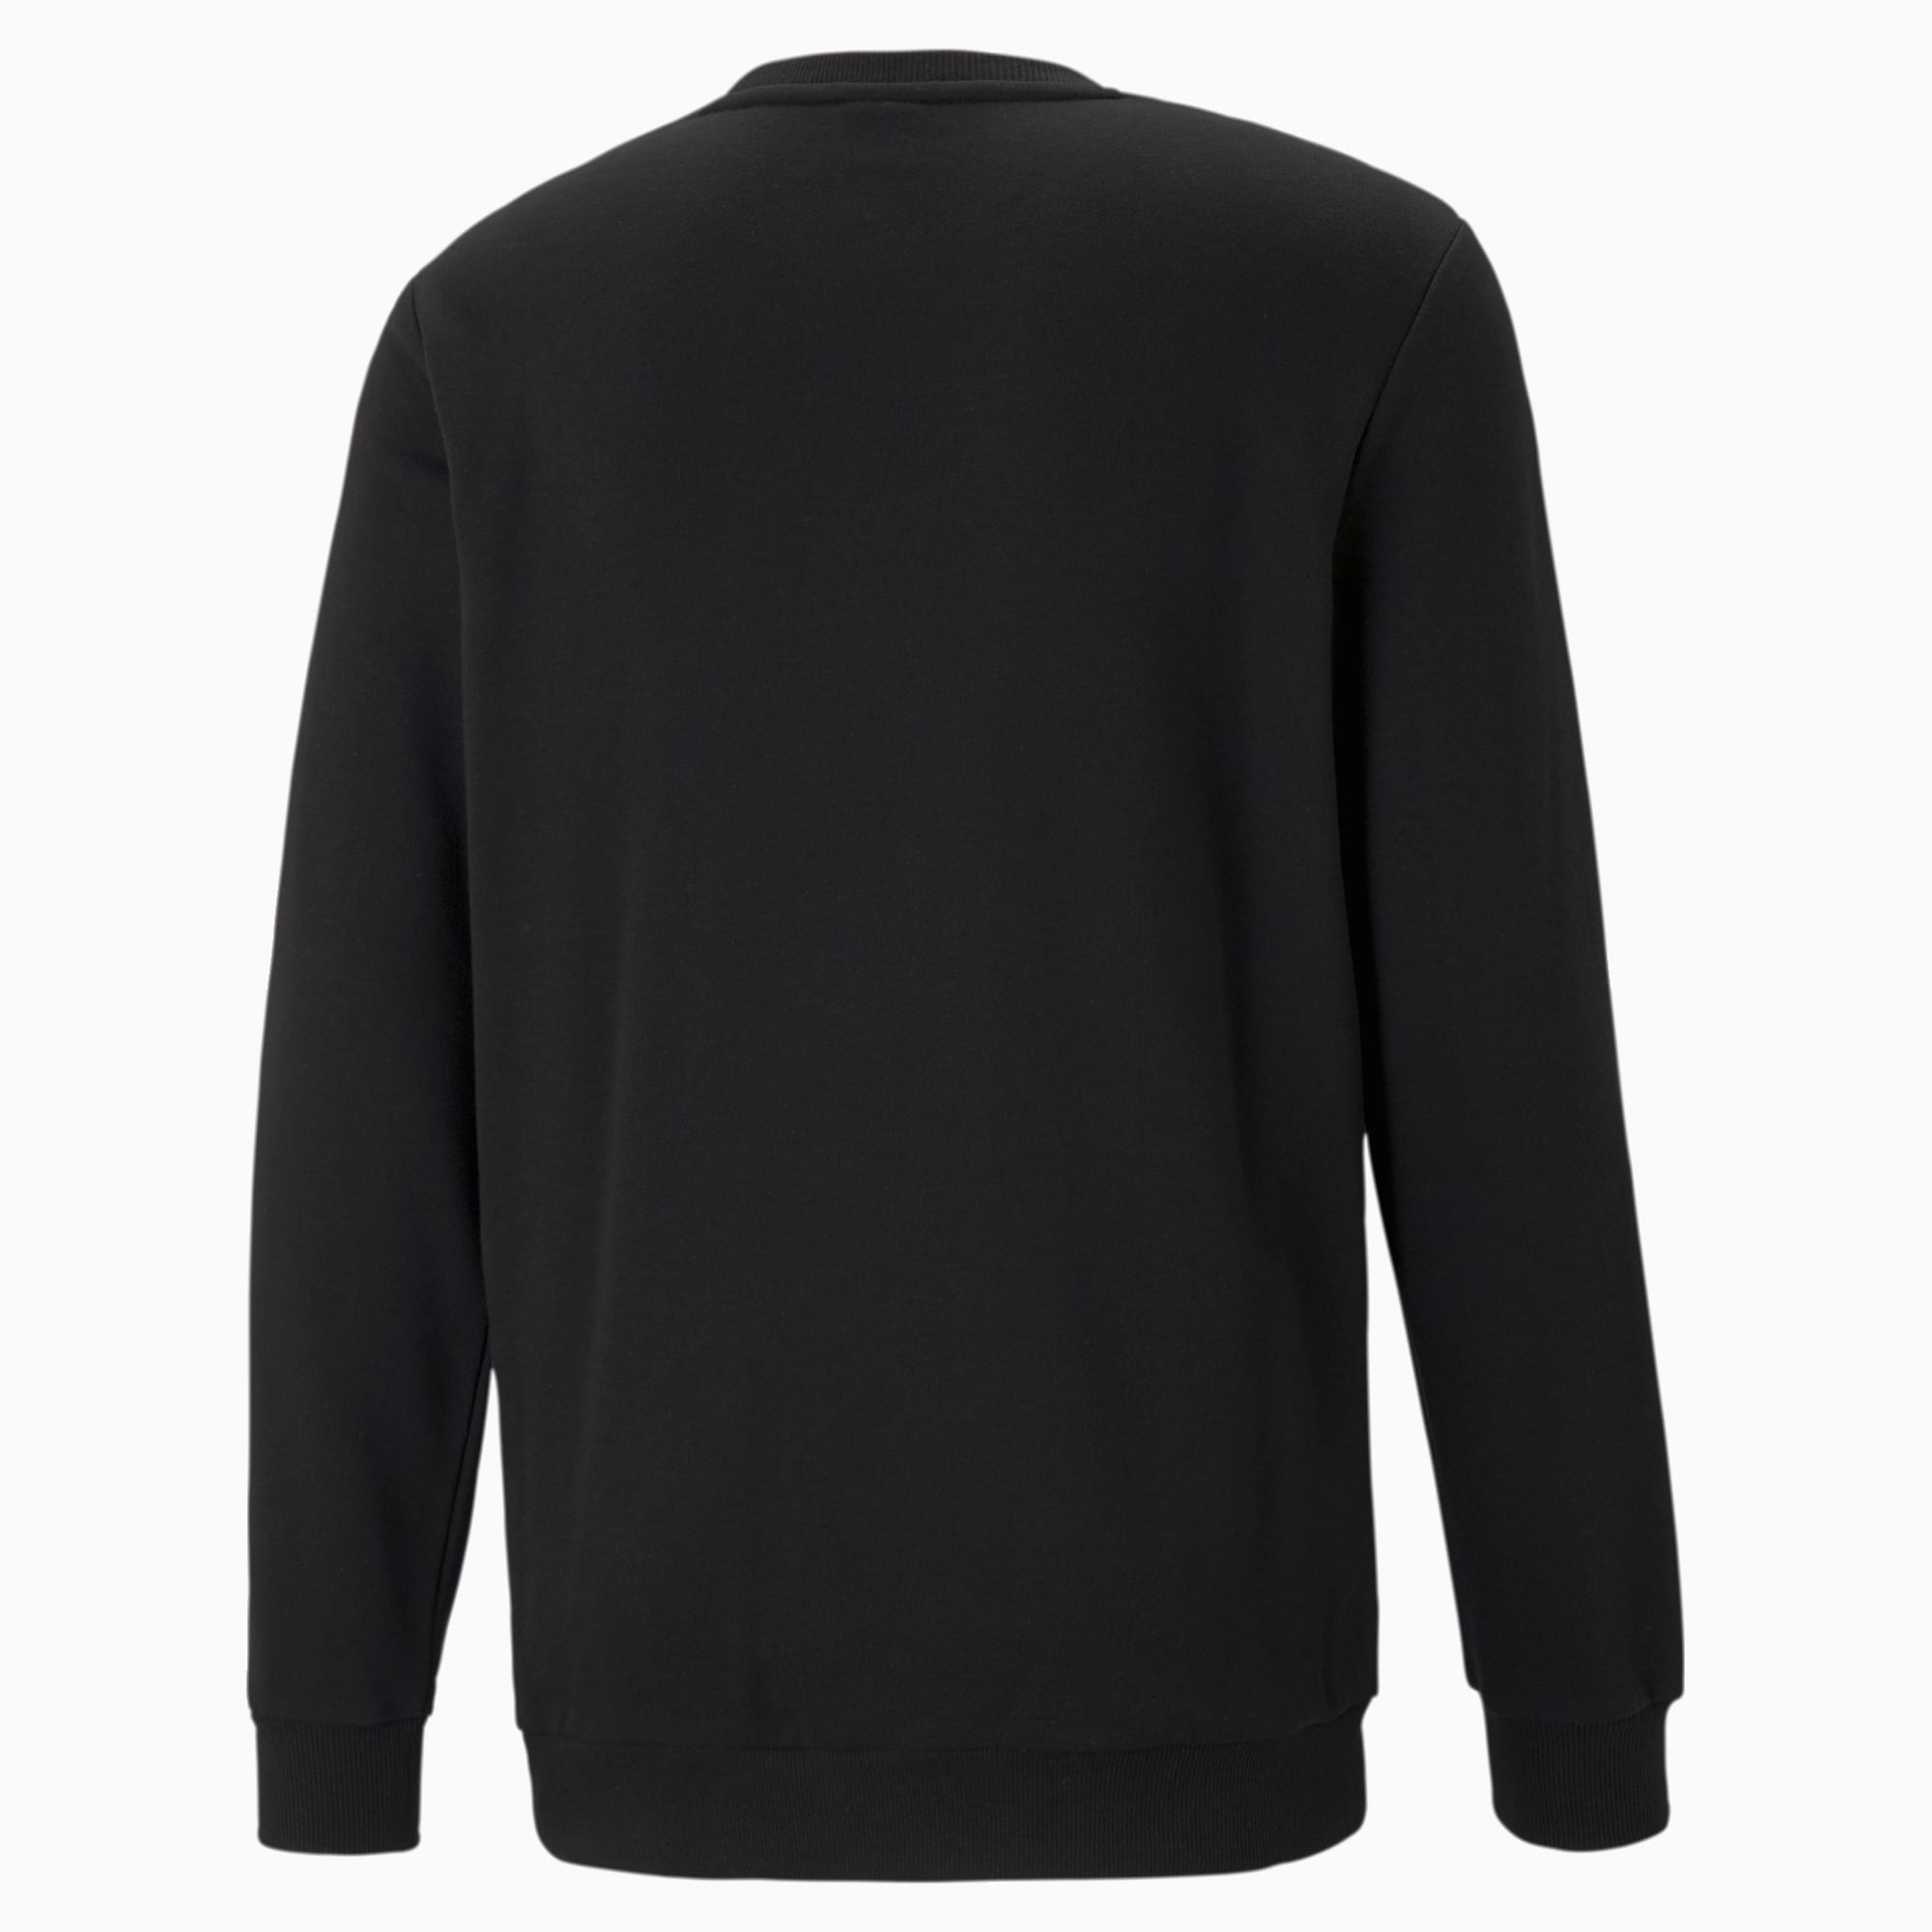 PUMA Essentials Small Logo Men's Sweatshirt, Black, Clothing